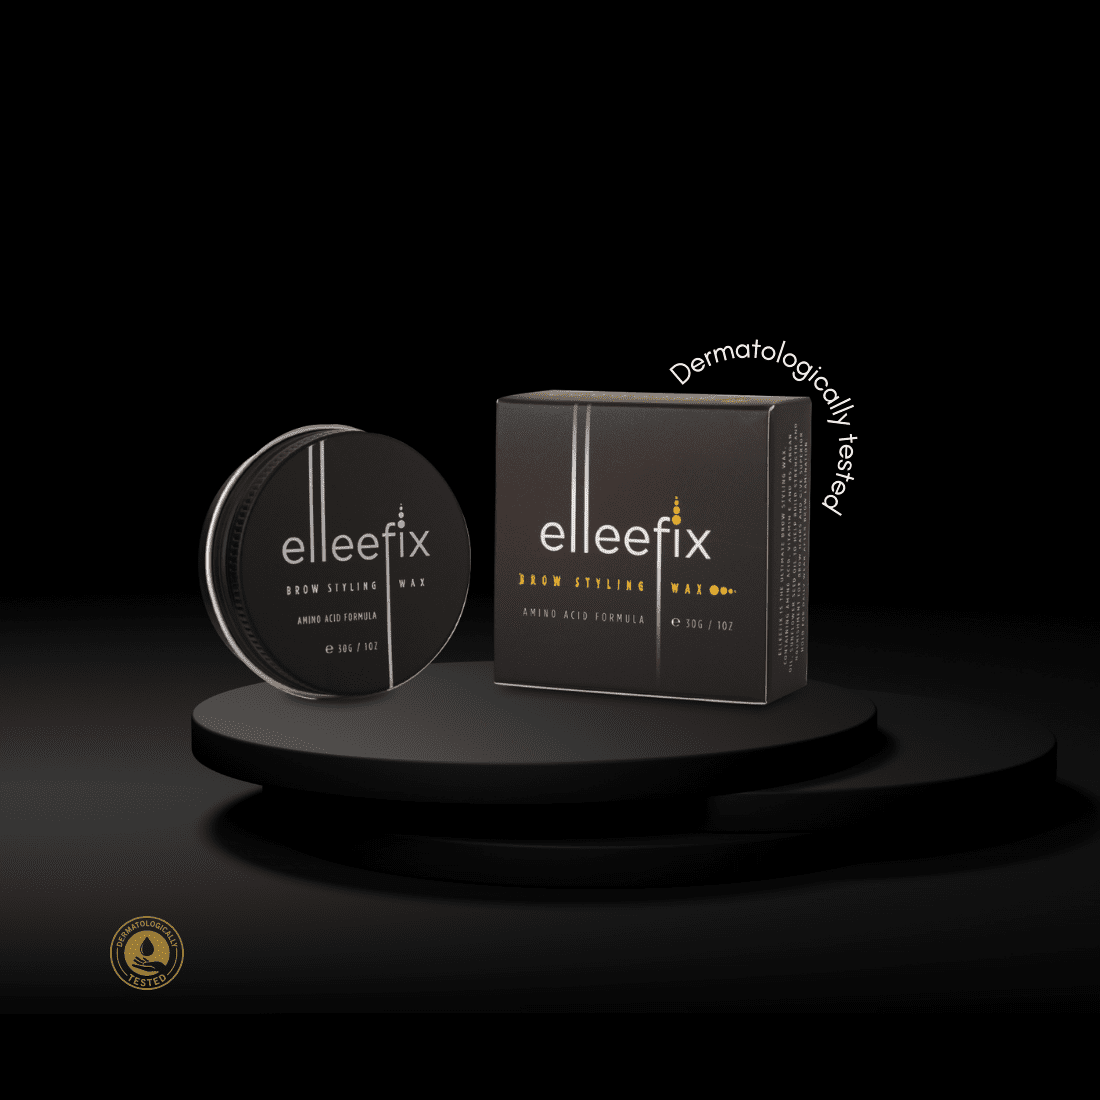 Elleefix Brow Styling Wax | Allure Professional Products